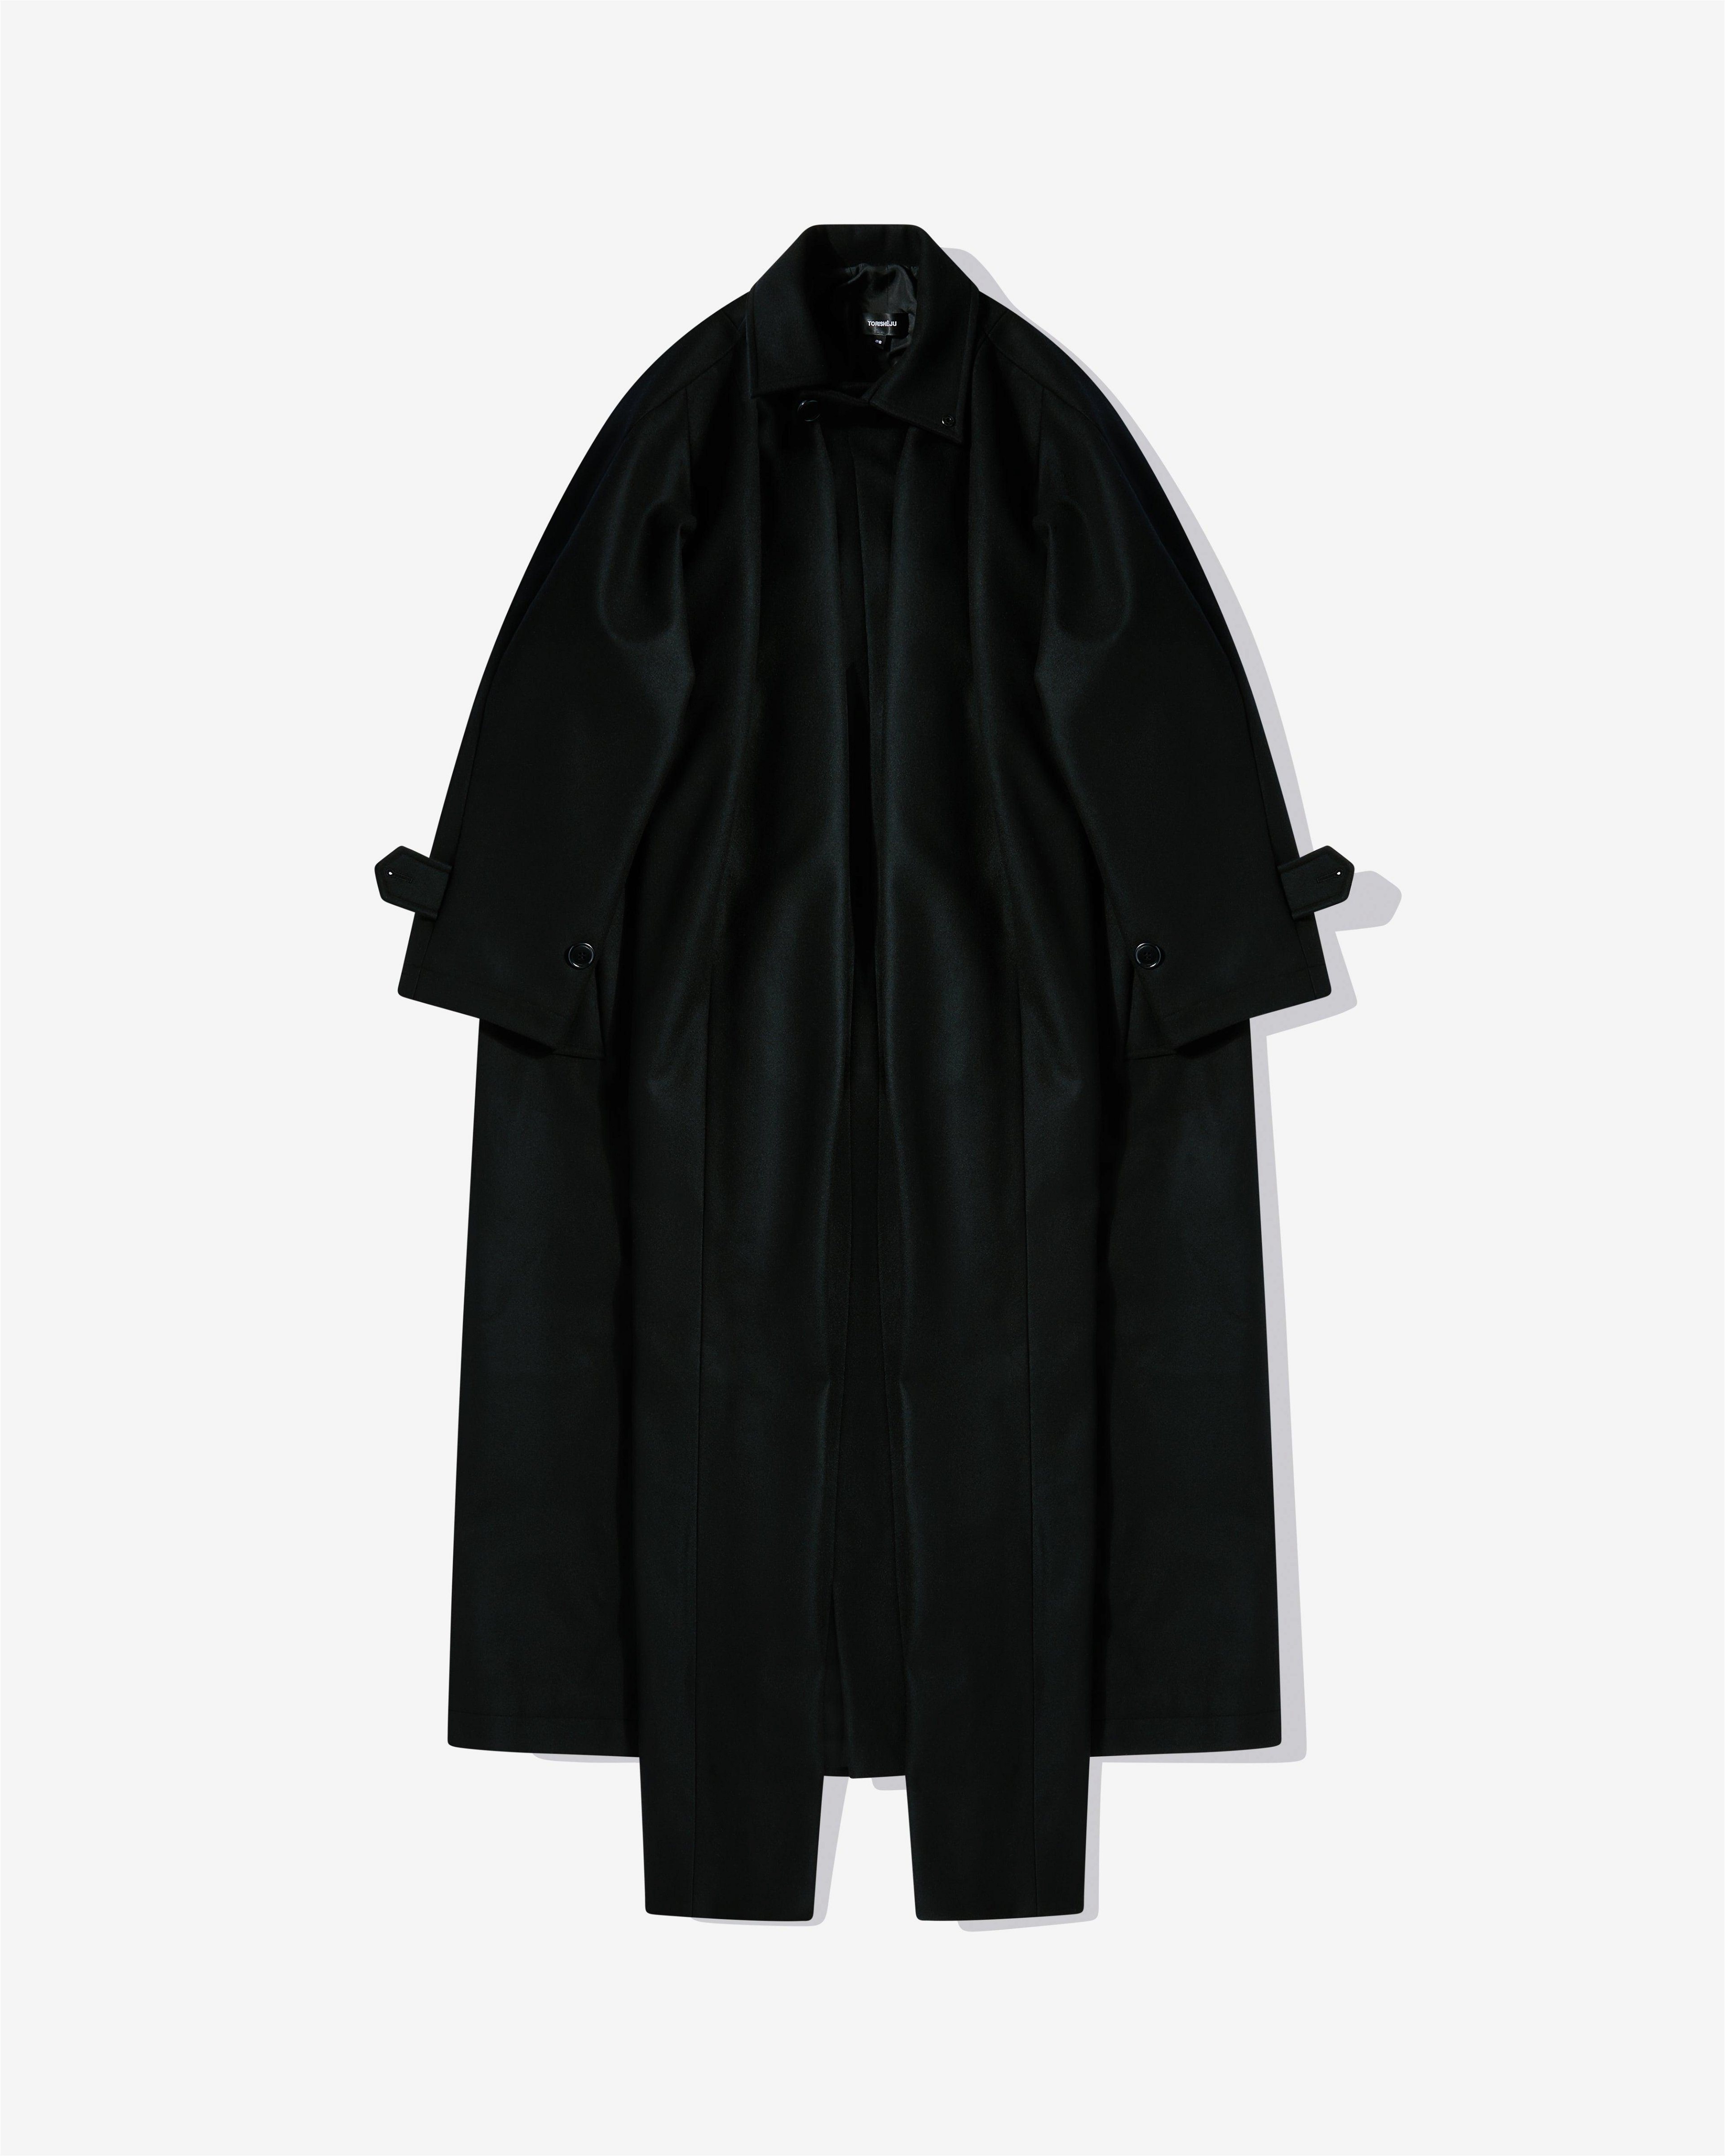 Torisheju - Women's Tye Coat - (Black) by TORISHEJU